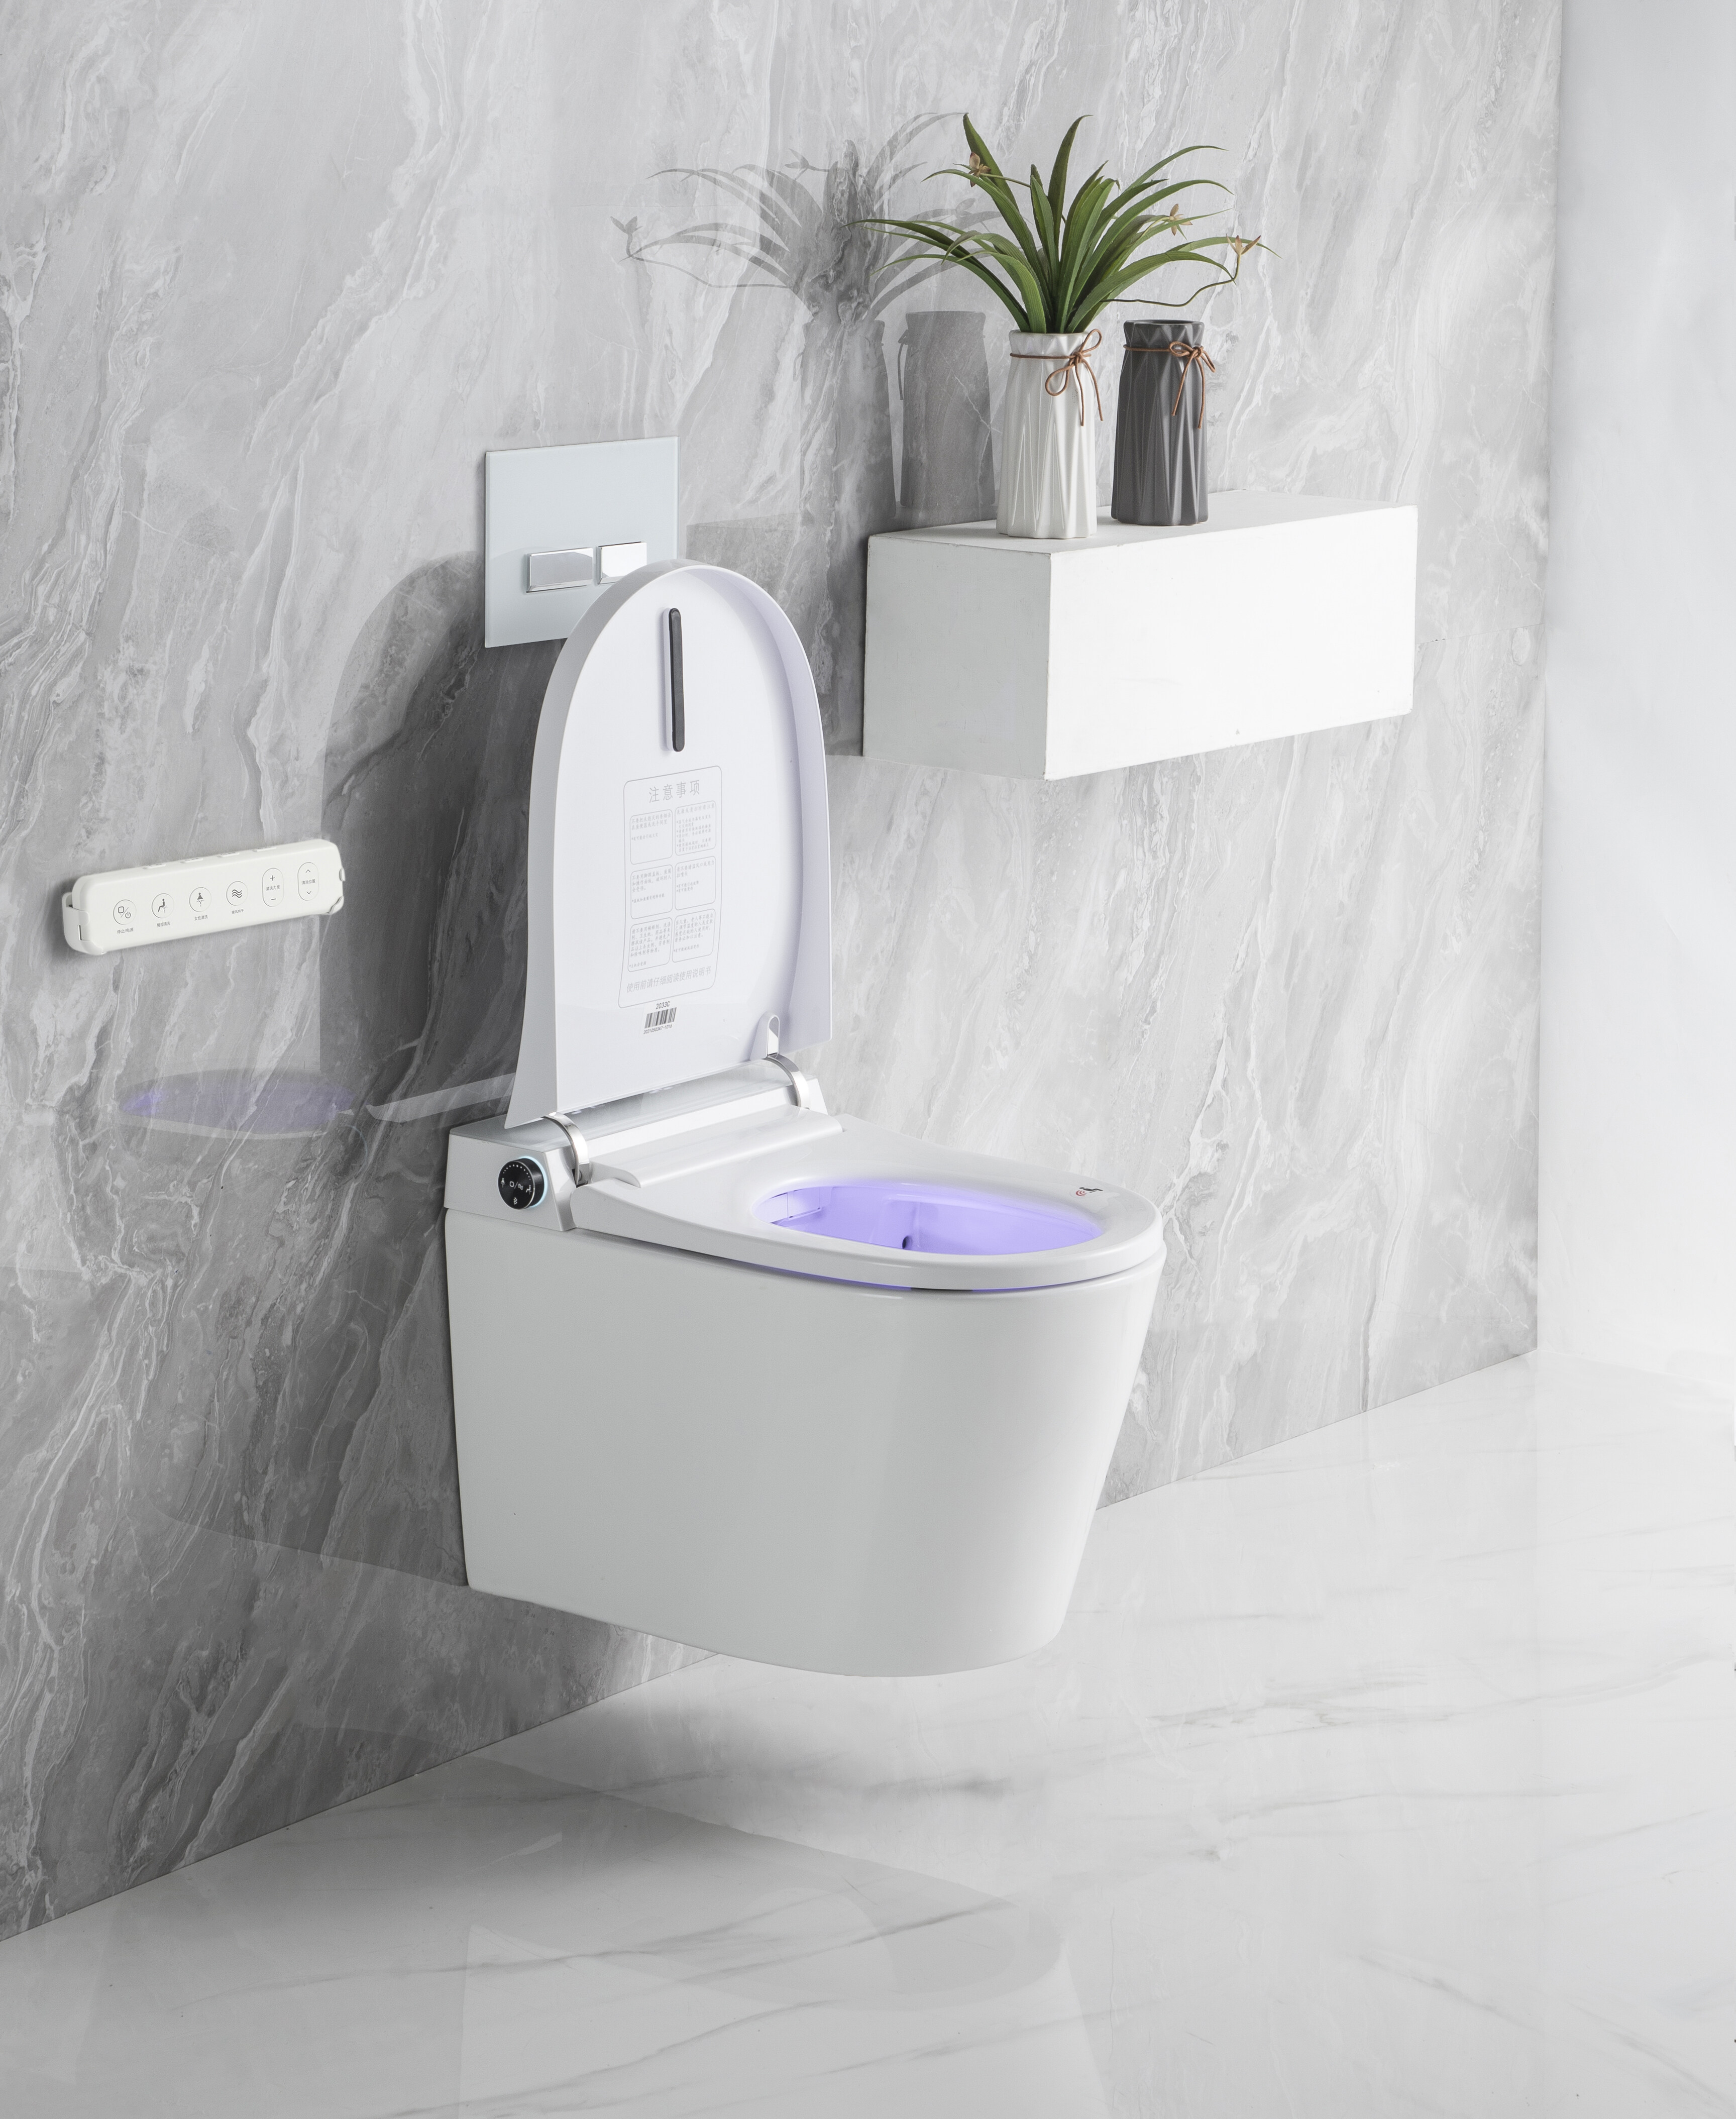 future smart toilet